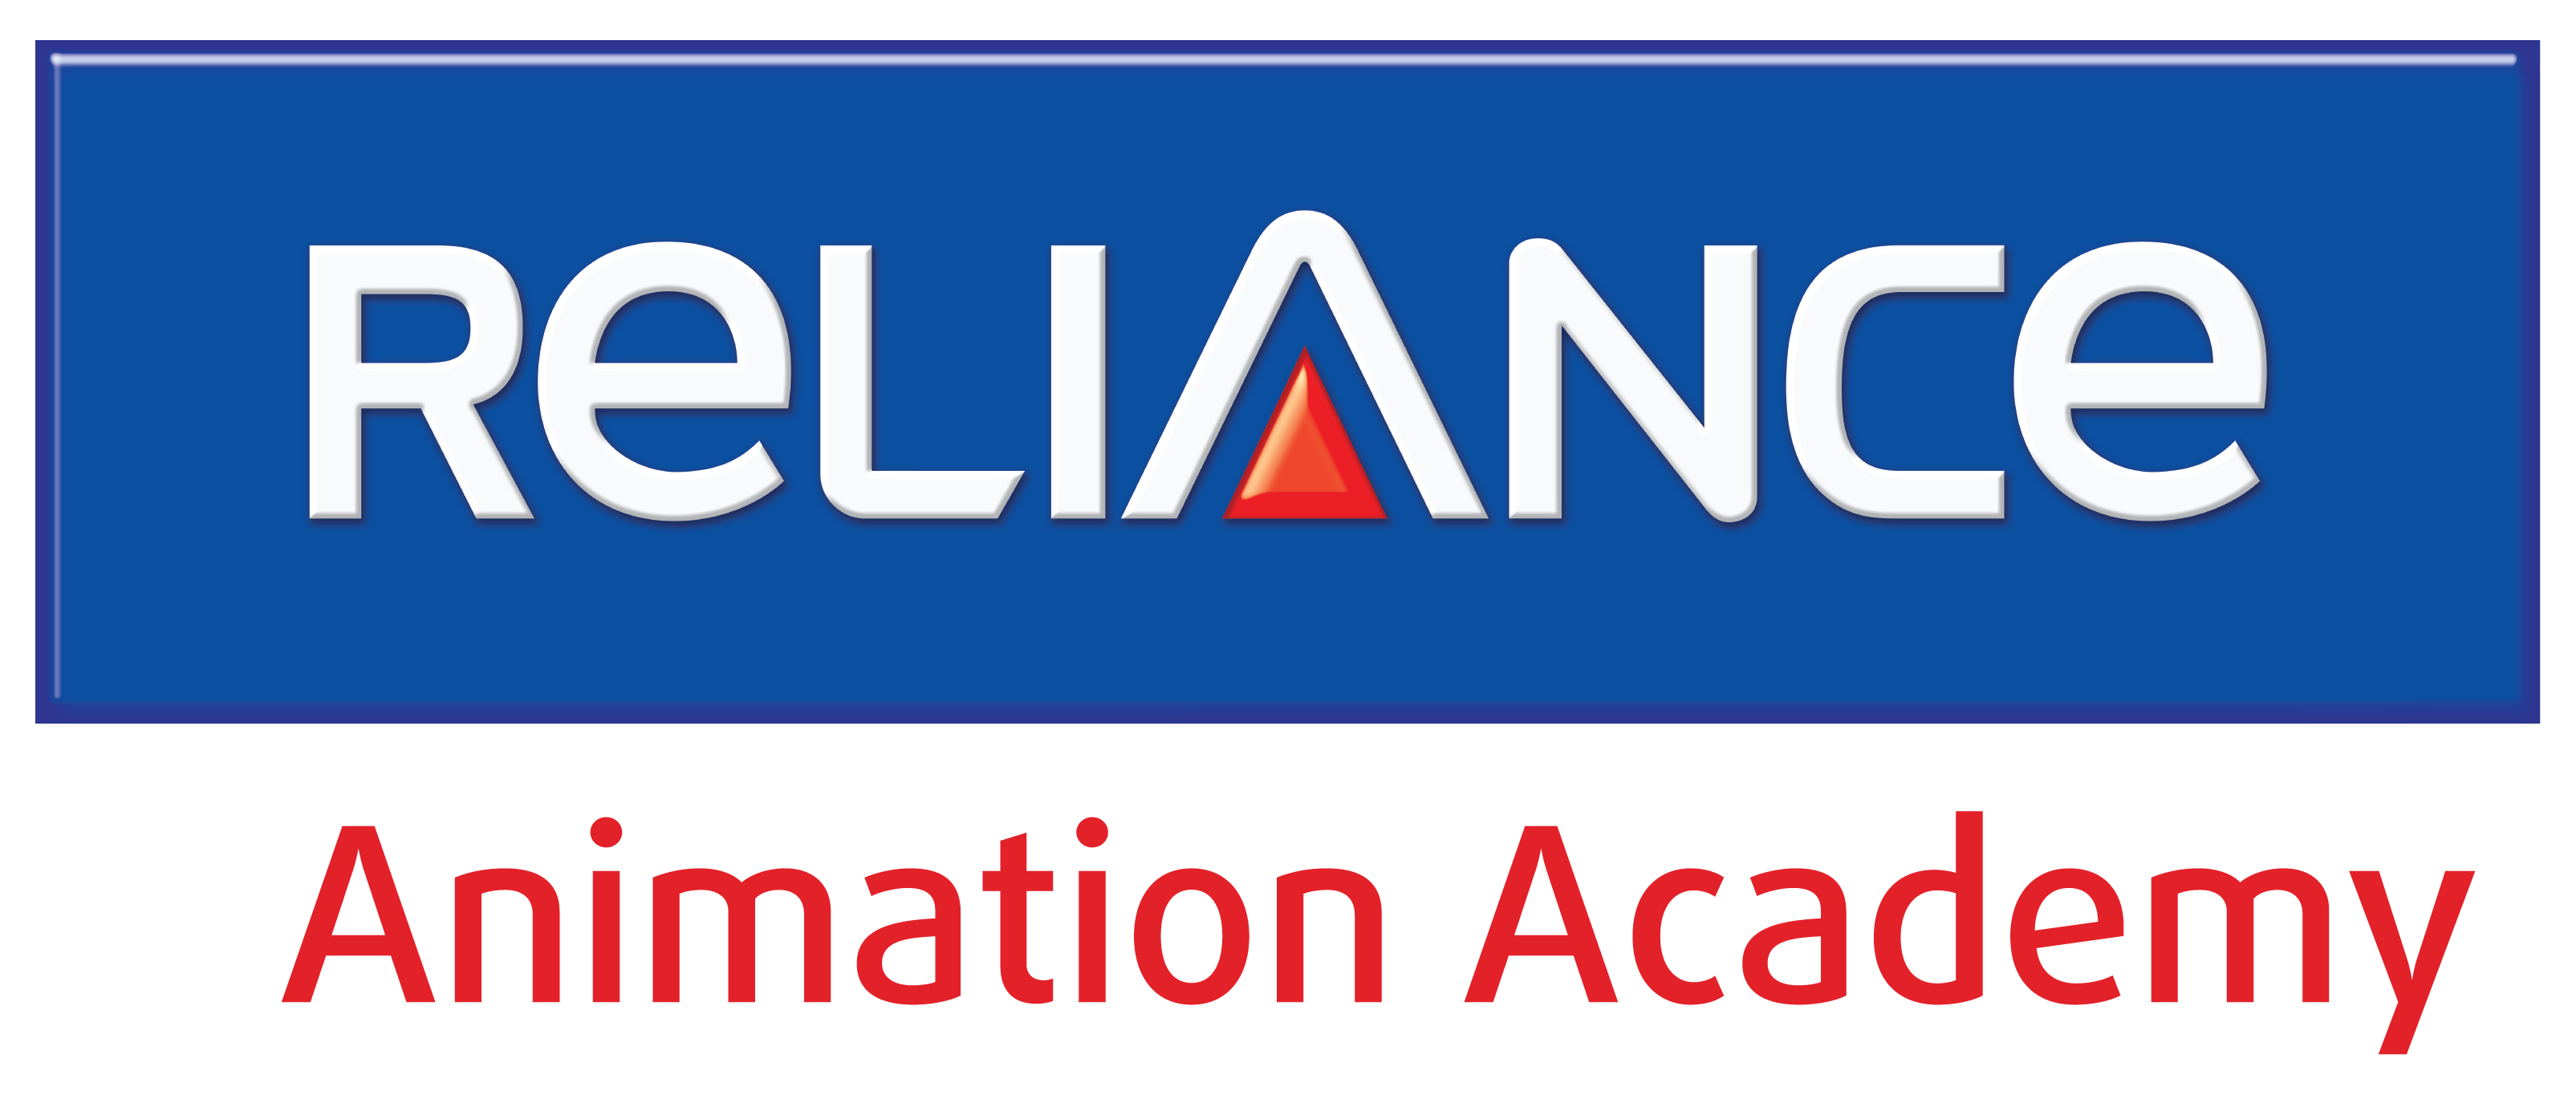 Reliance Animation Academy - Logo